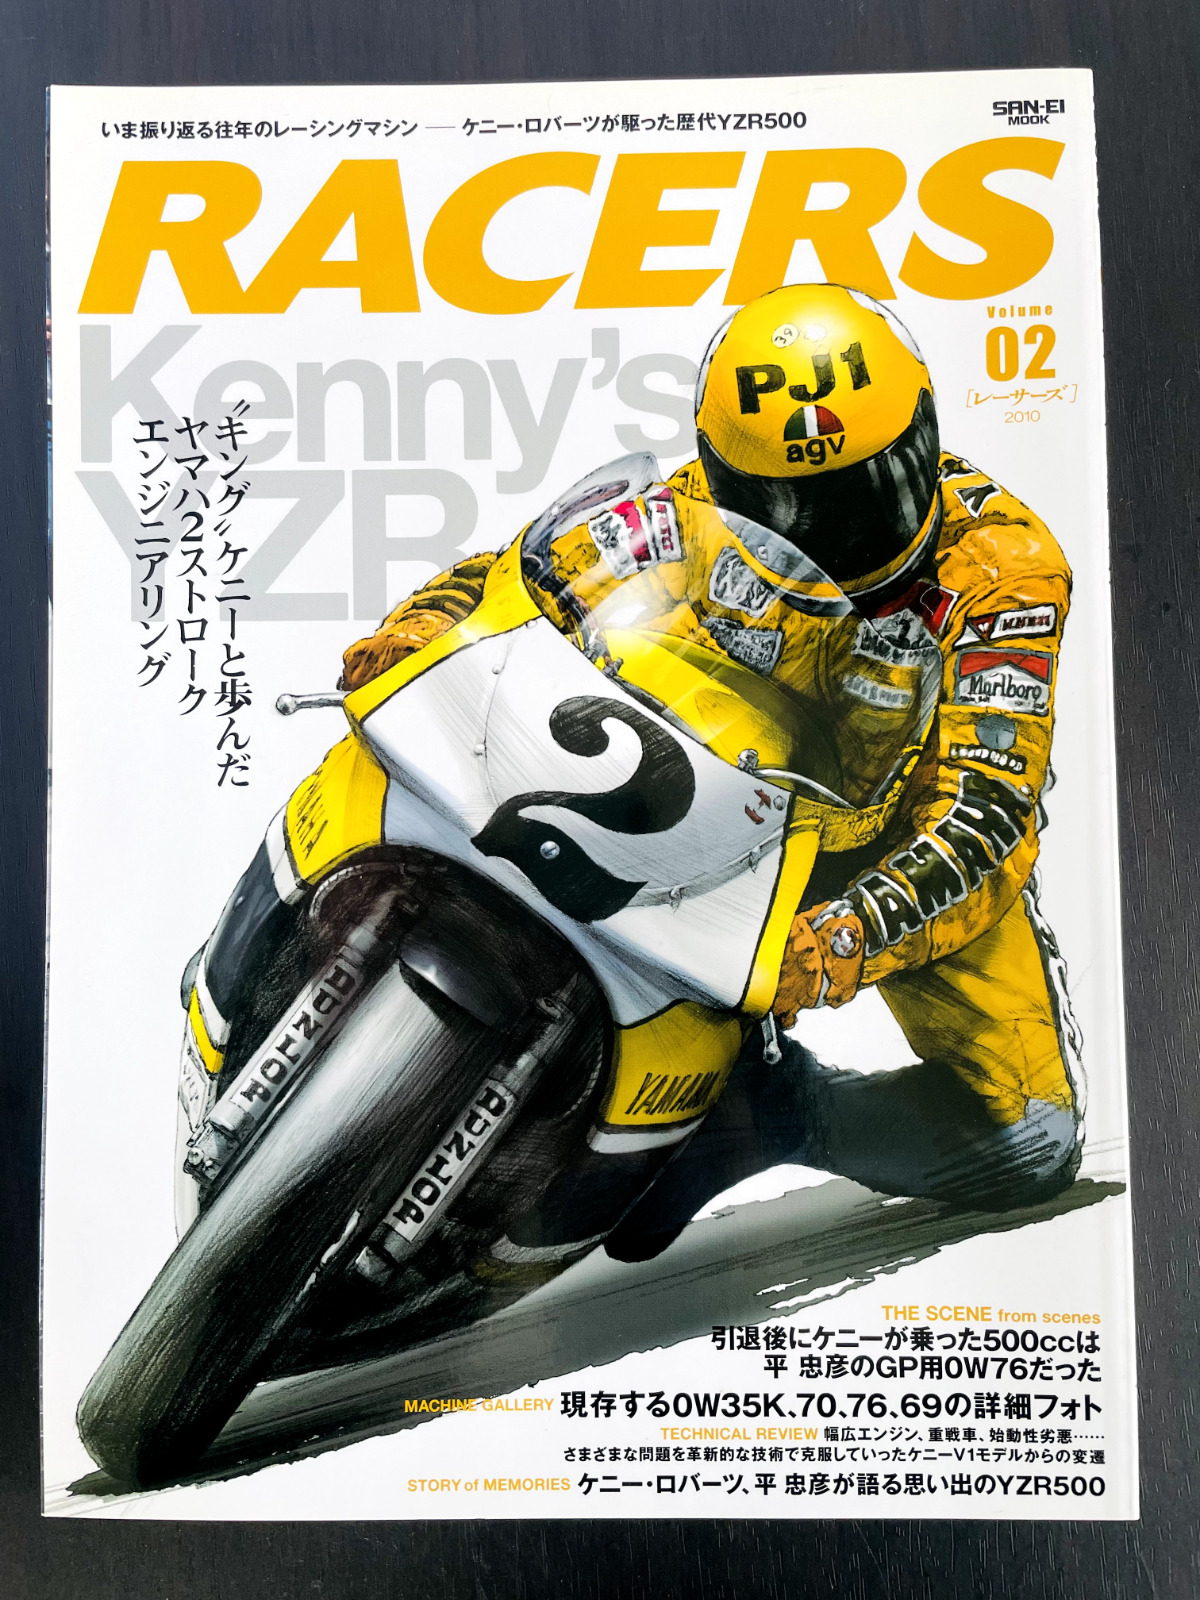 RACERS Vol.02 YAMAHA Kenny Roberts YZR500 Japanese Motorcycle Magazine 2010